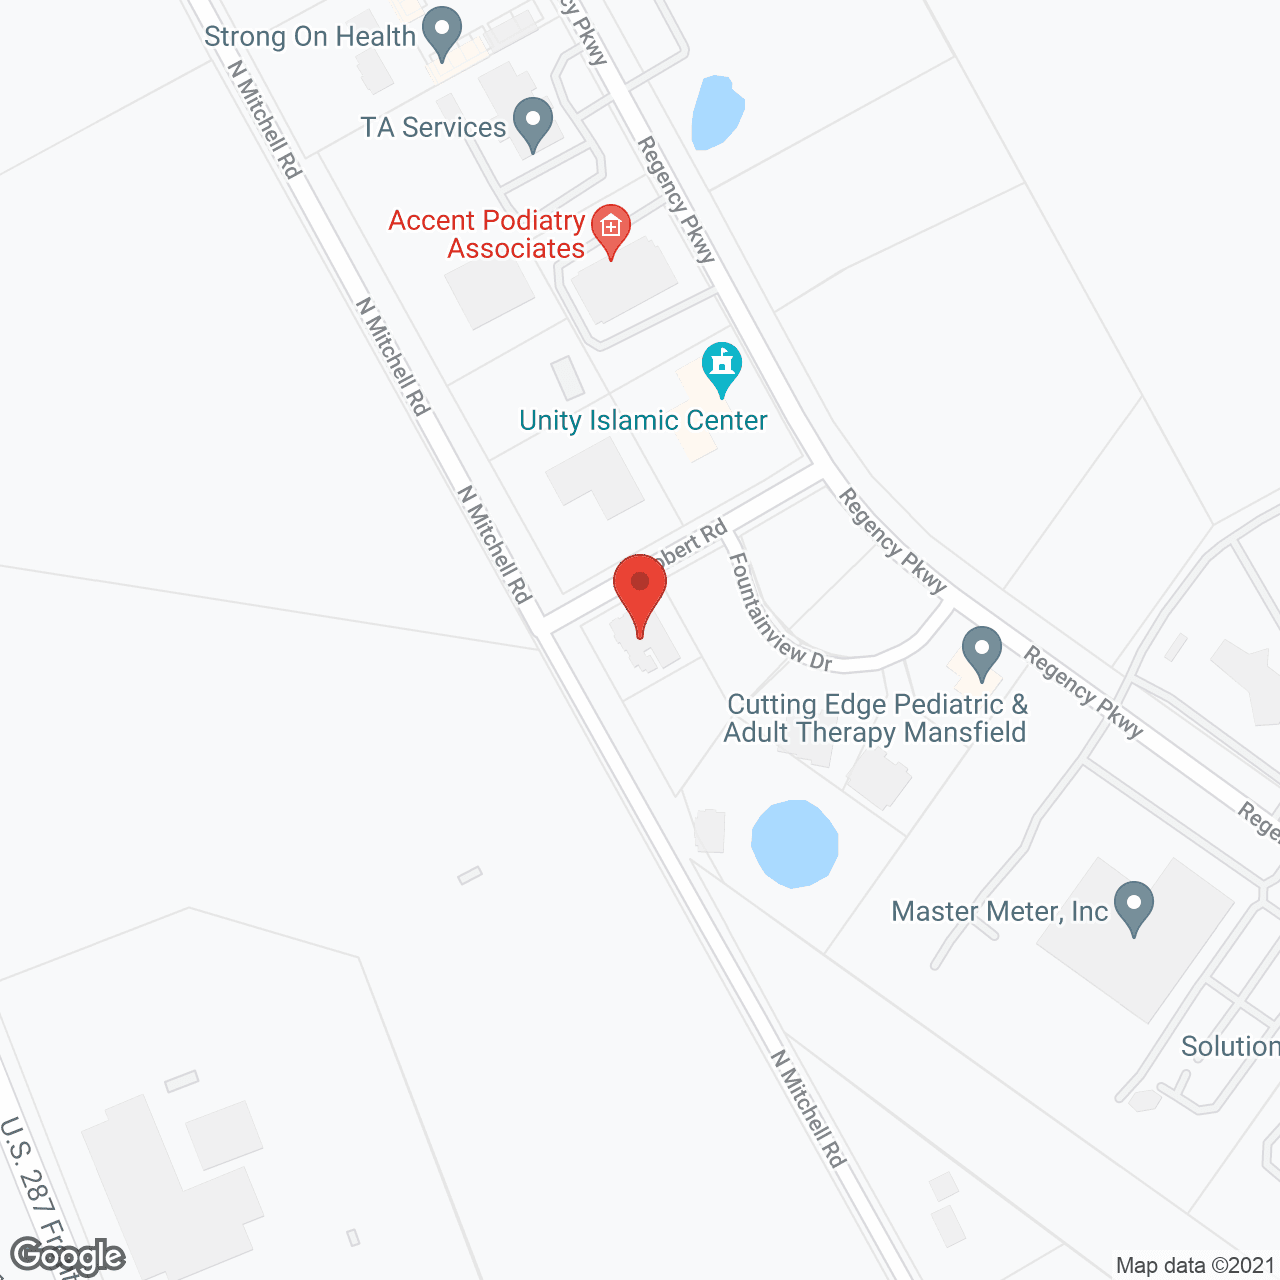 Echelon Place in google map